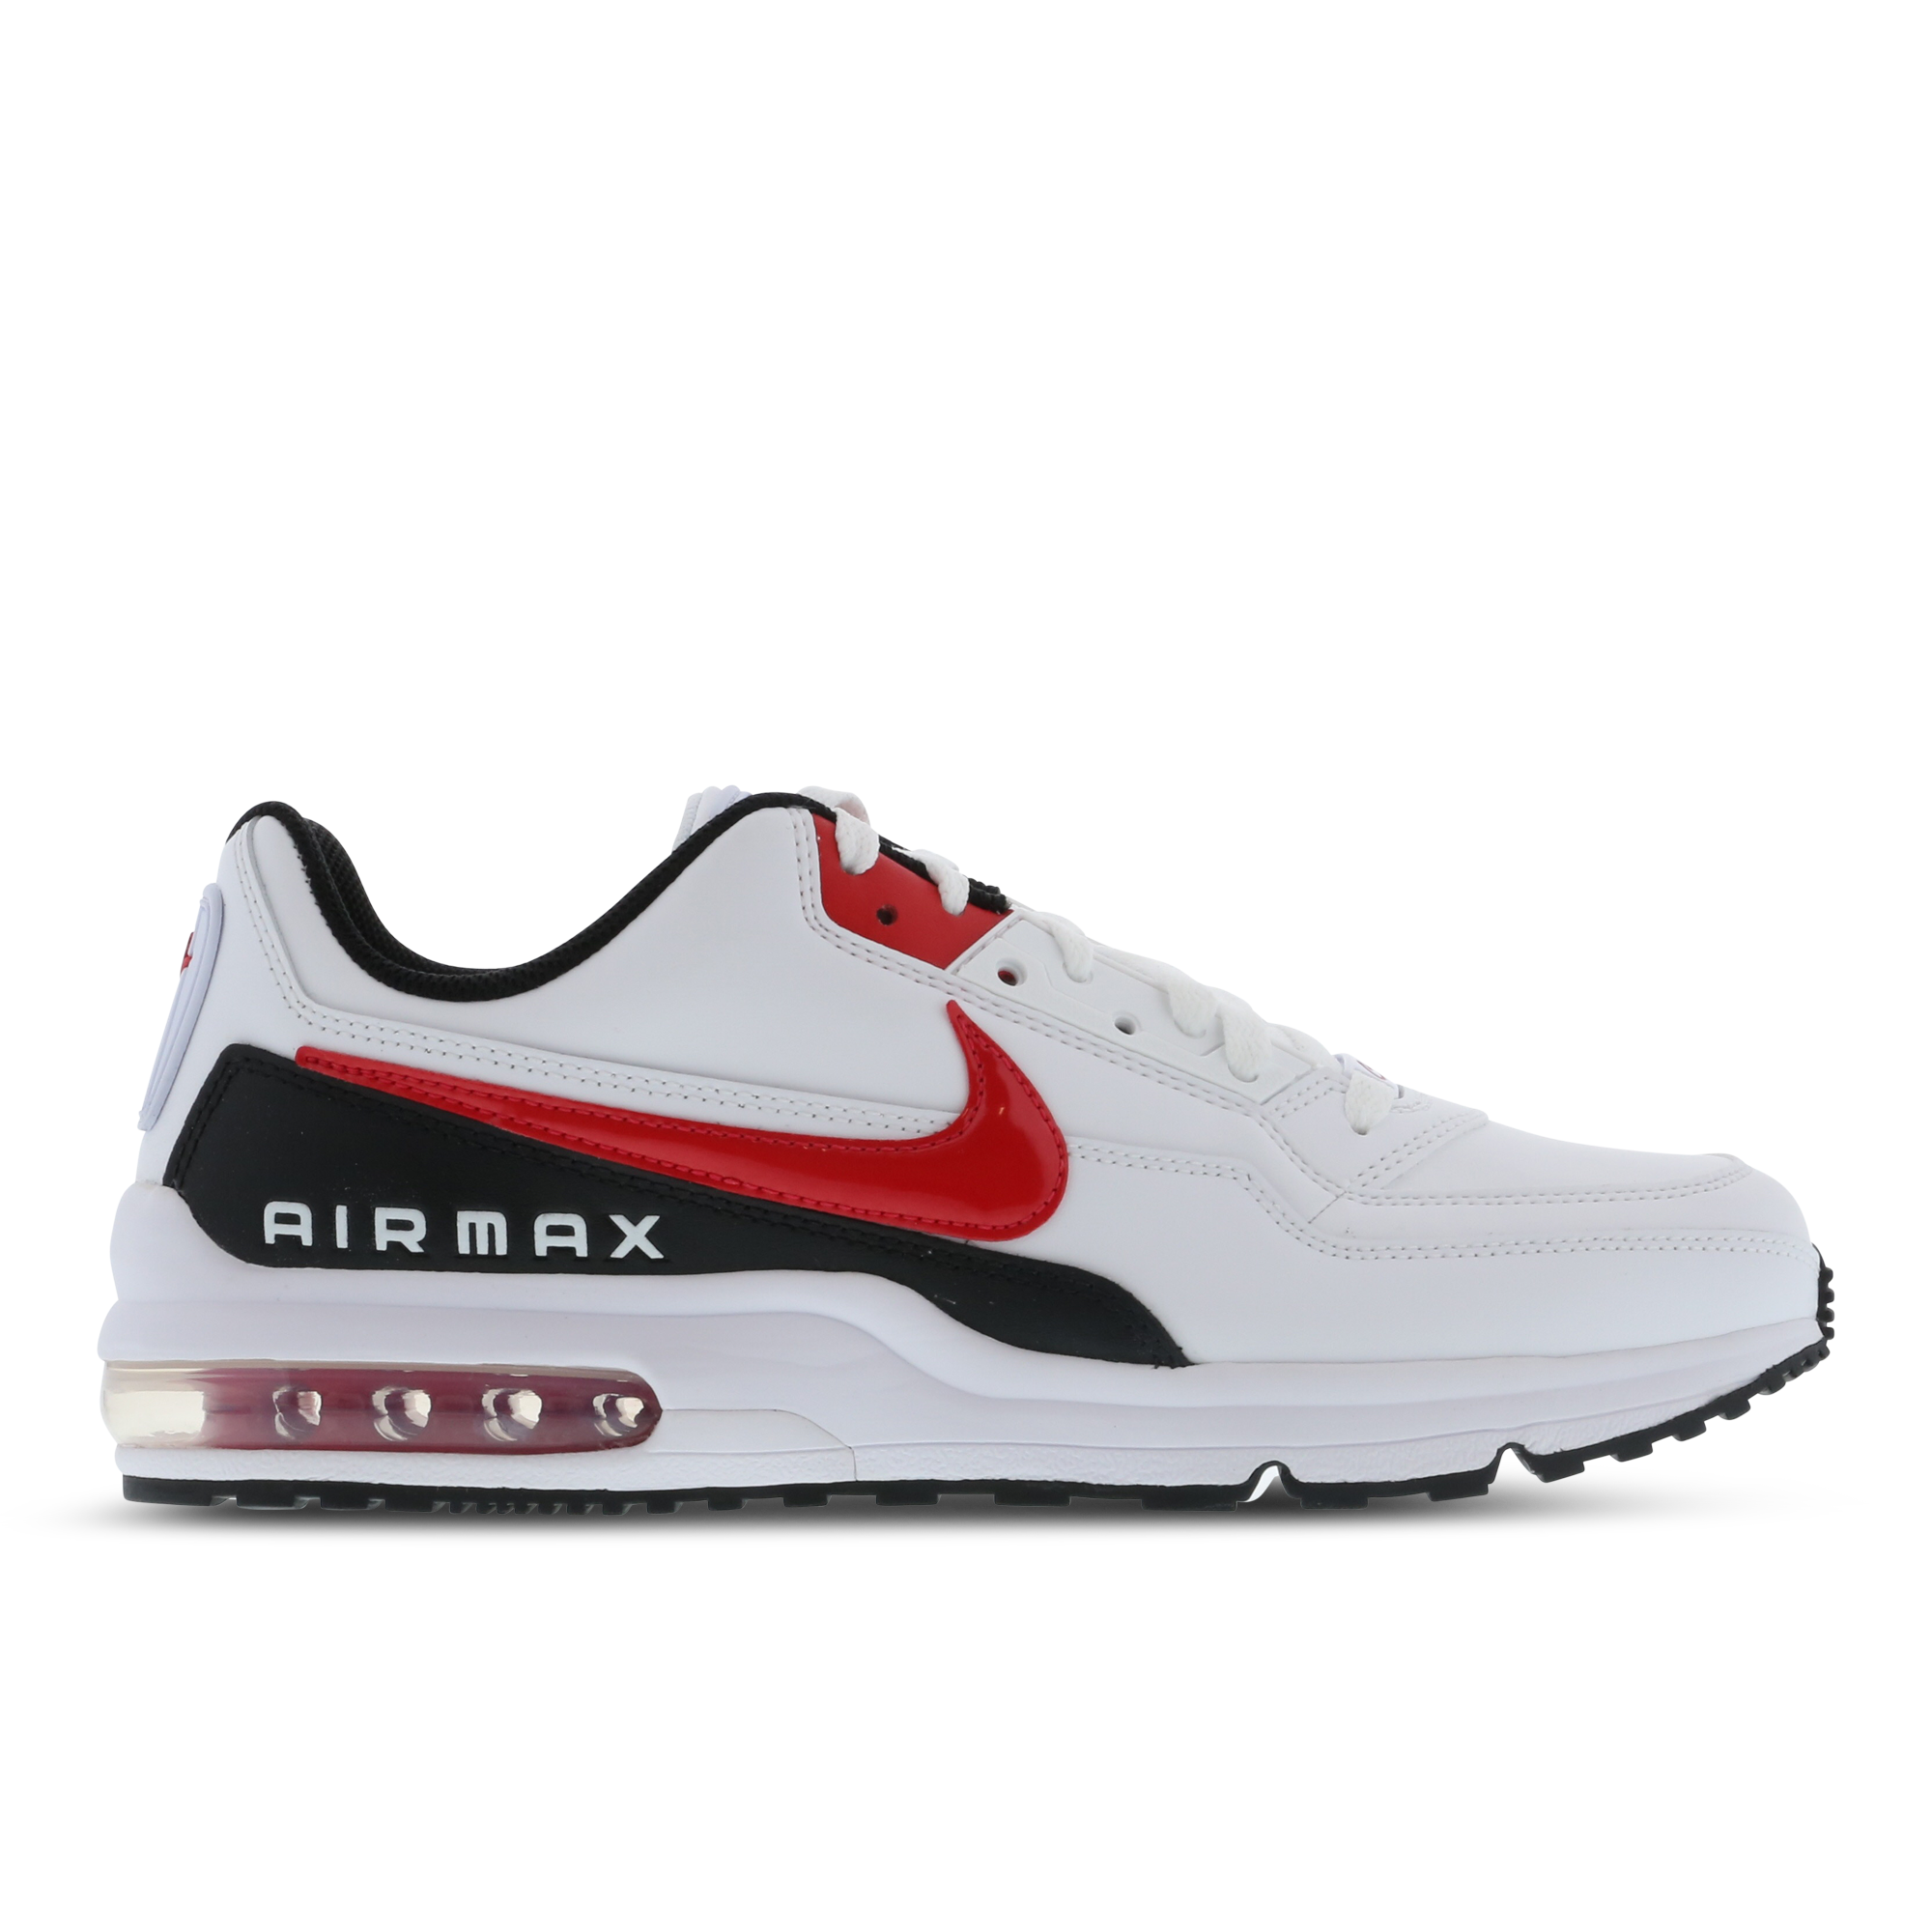 Nike Air Max LTD @ Footlocker